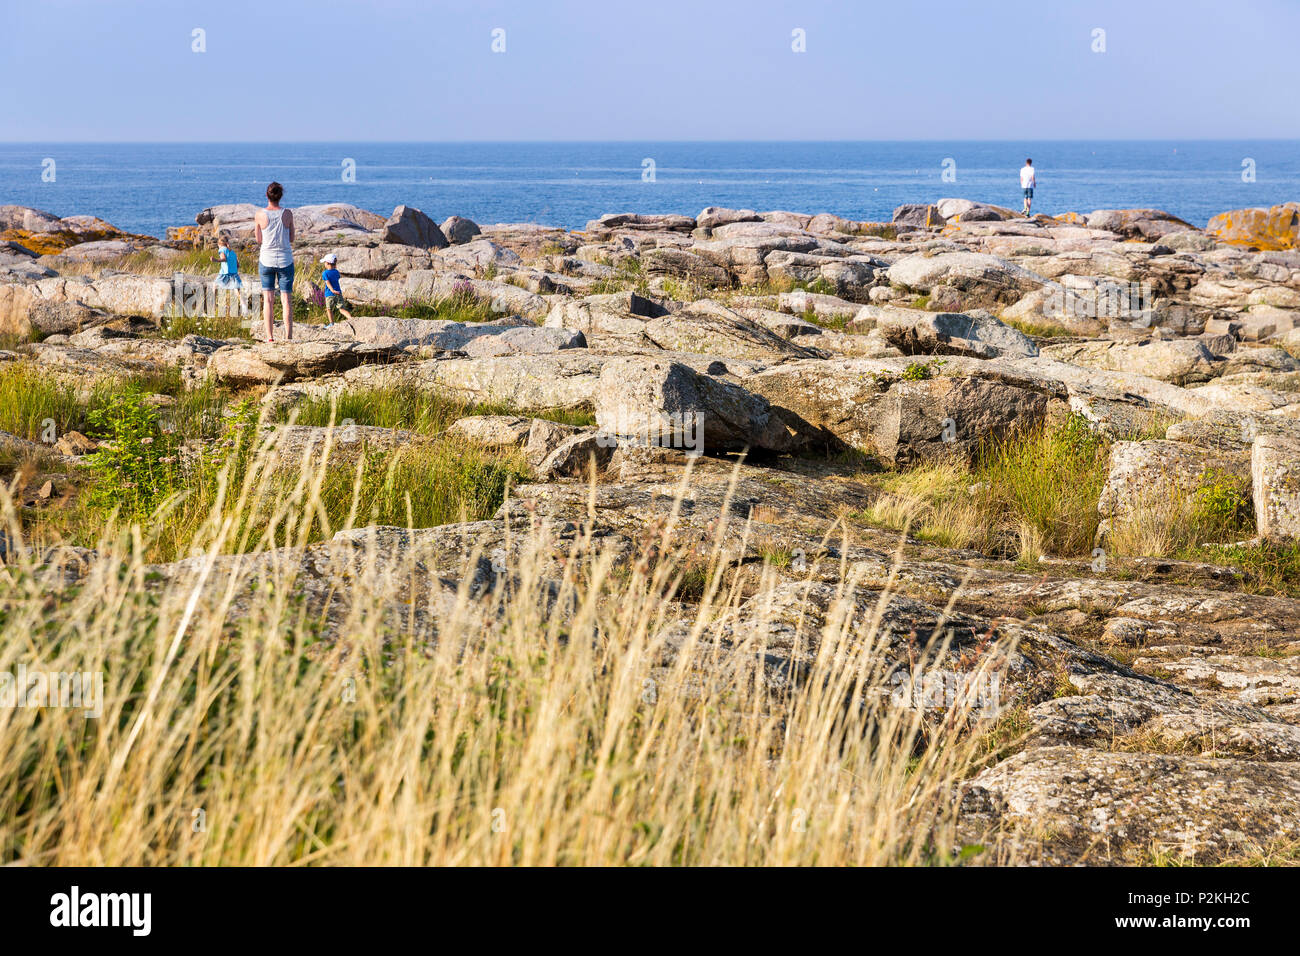 Familie wandern entlang der felsigen Küste, Sommer, Ostsee, Bornholm, Blokhus, Dänemark, Europa Stockfoto